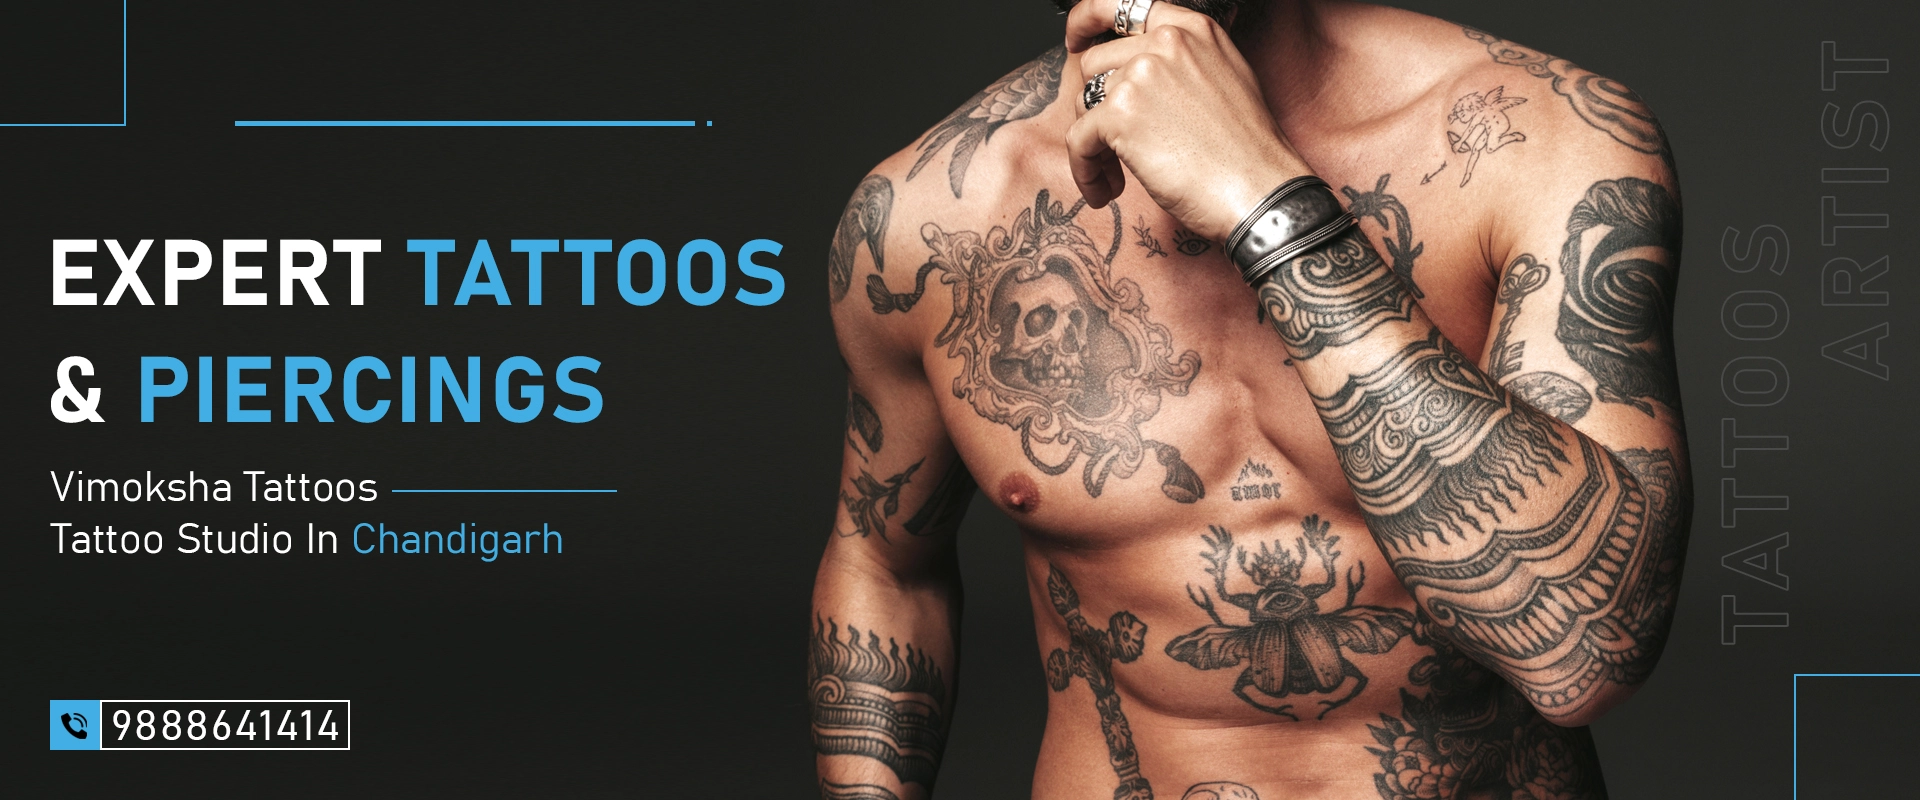 10 Best Tattoo Shops in Atlanta - Discover Walks Blog